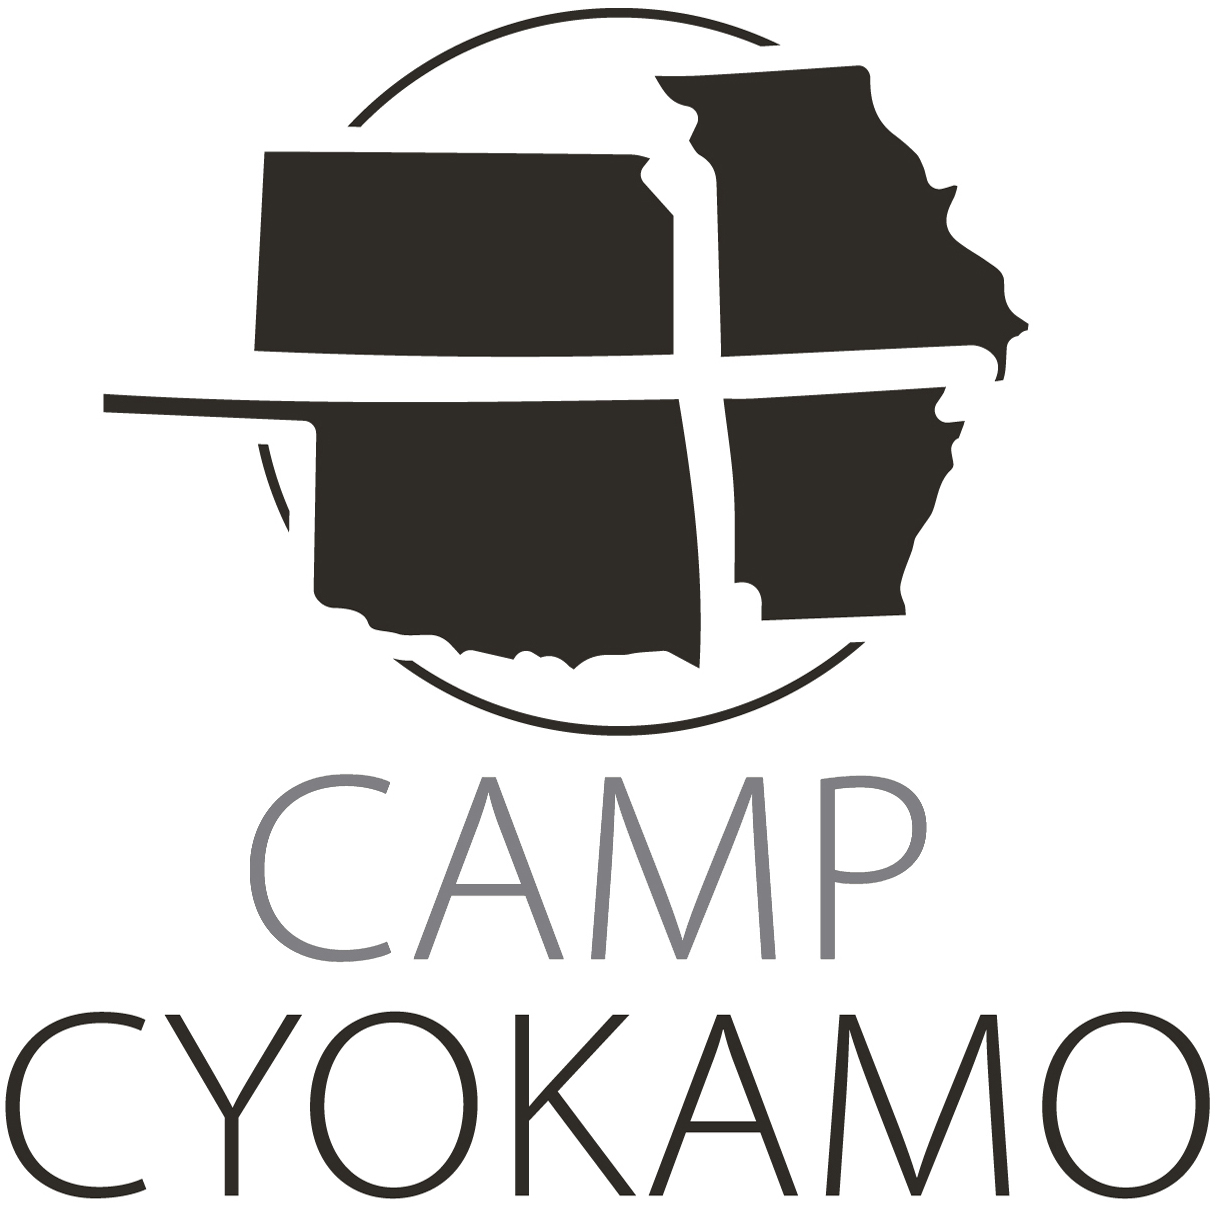 Camp Cyokamo Stacked Centered (gray).jpg